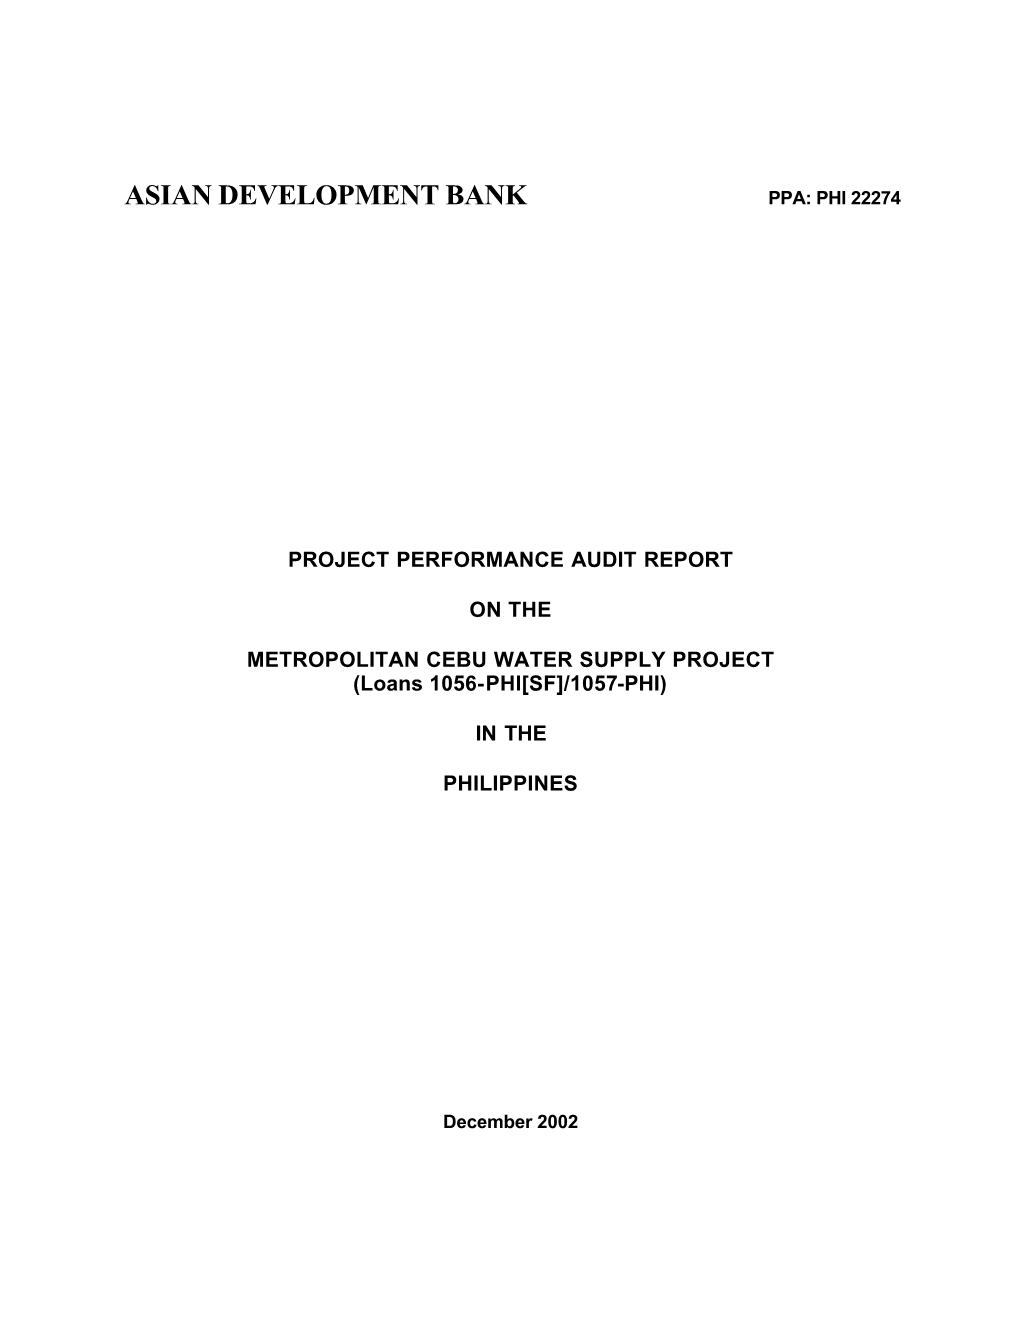 PPAR: Philippines: Metropolitan Cebu Water Supply Project